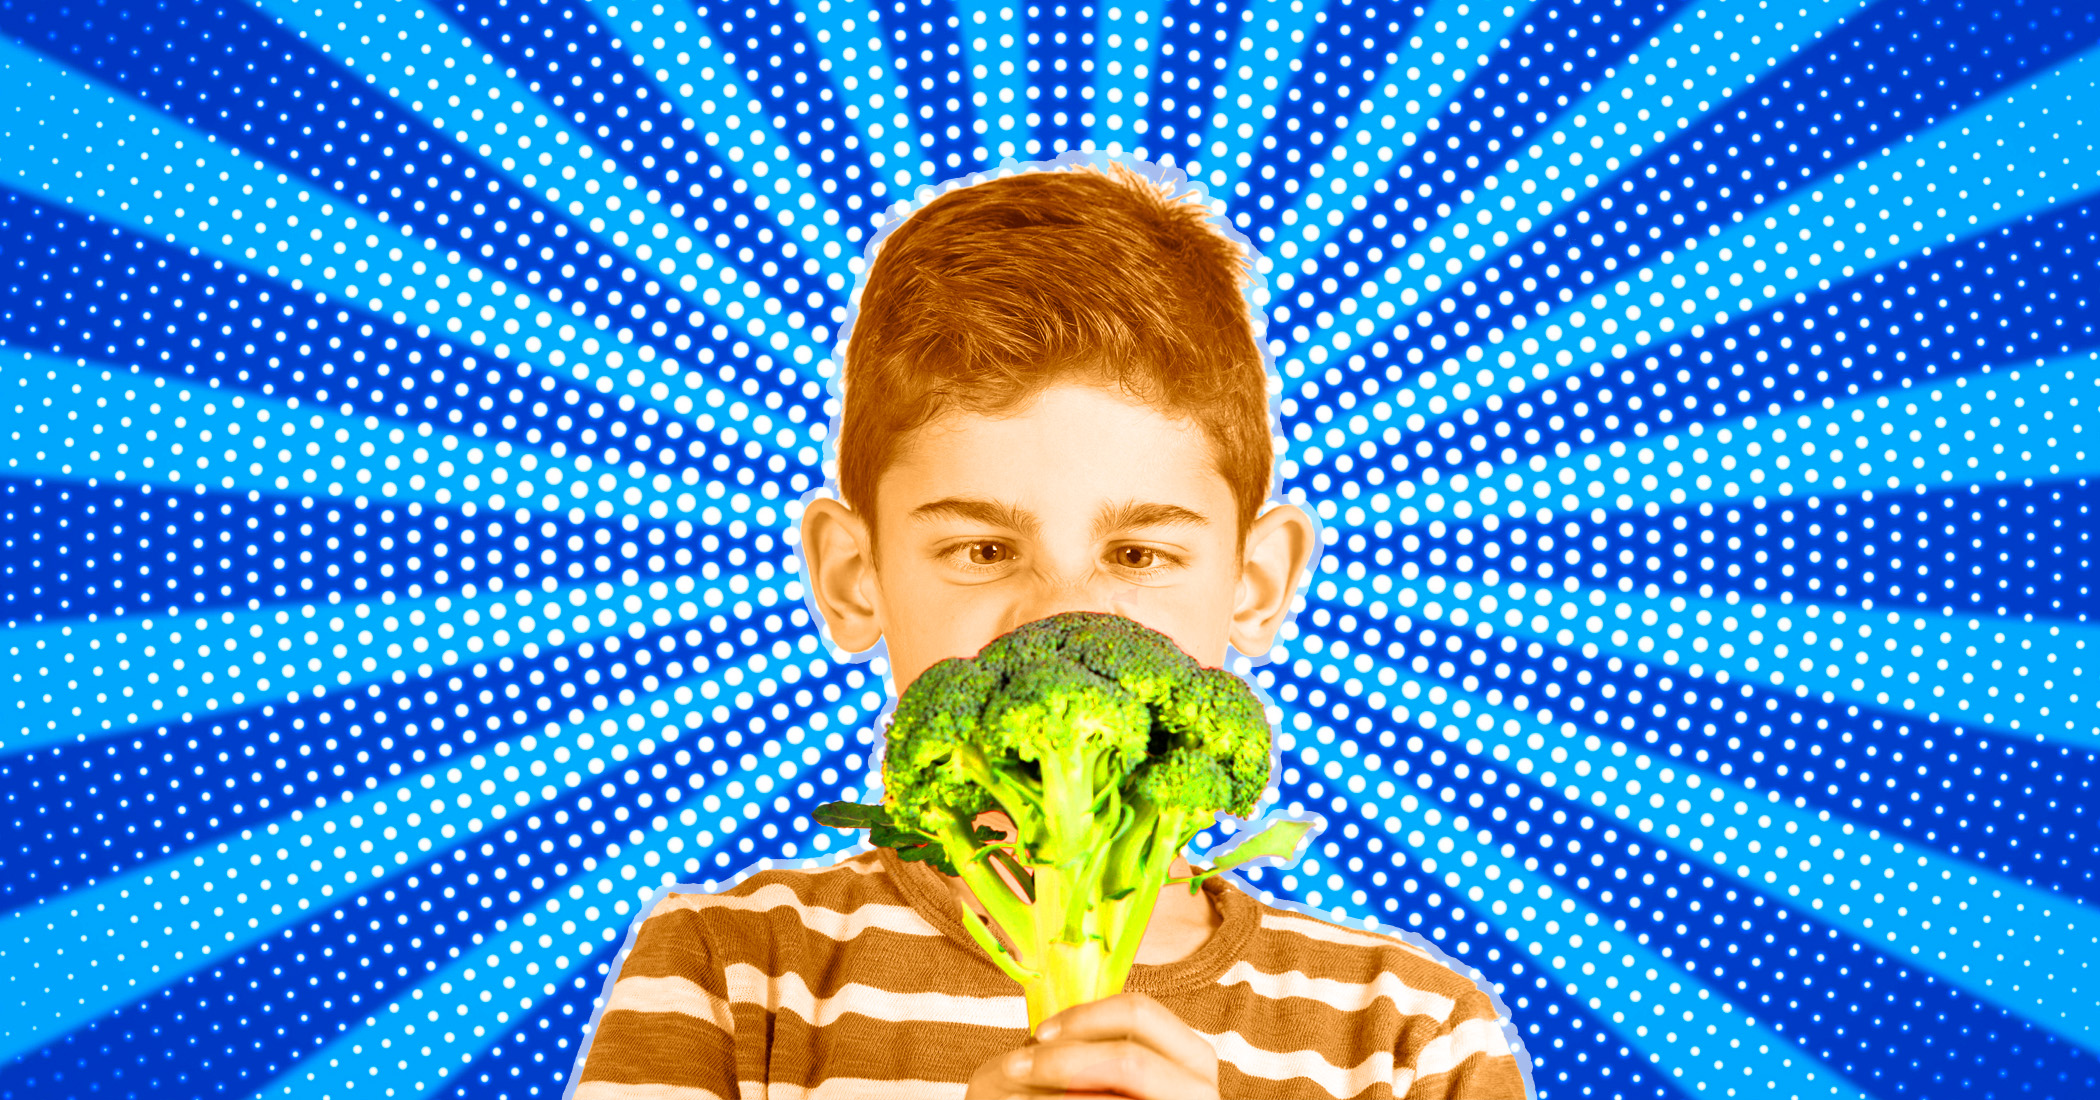 Fussy kid looking at broccoli.